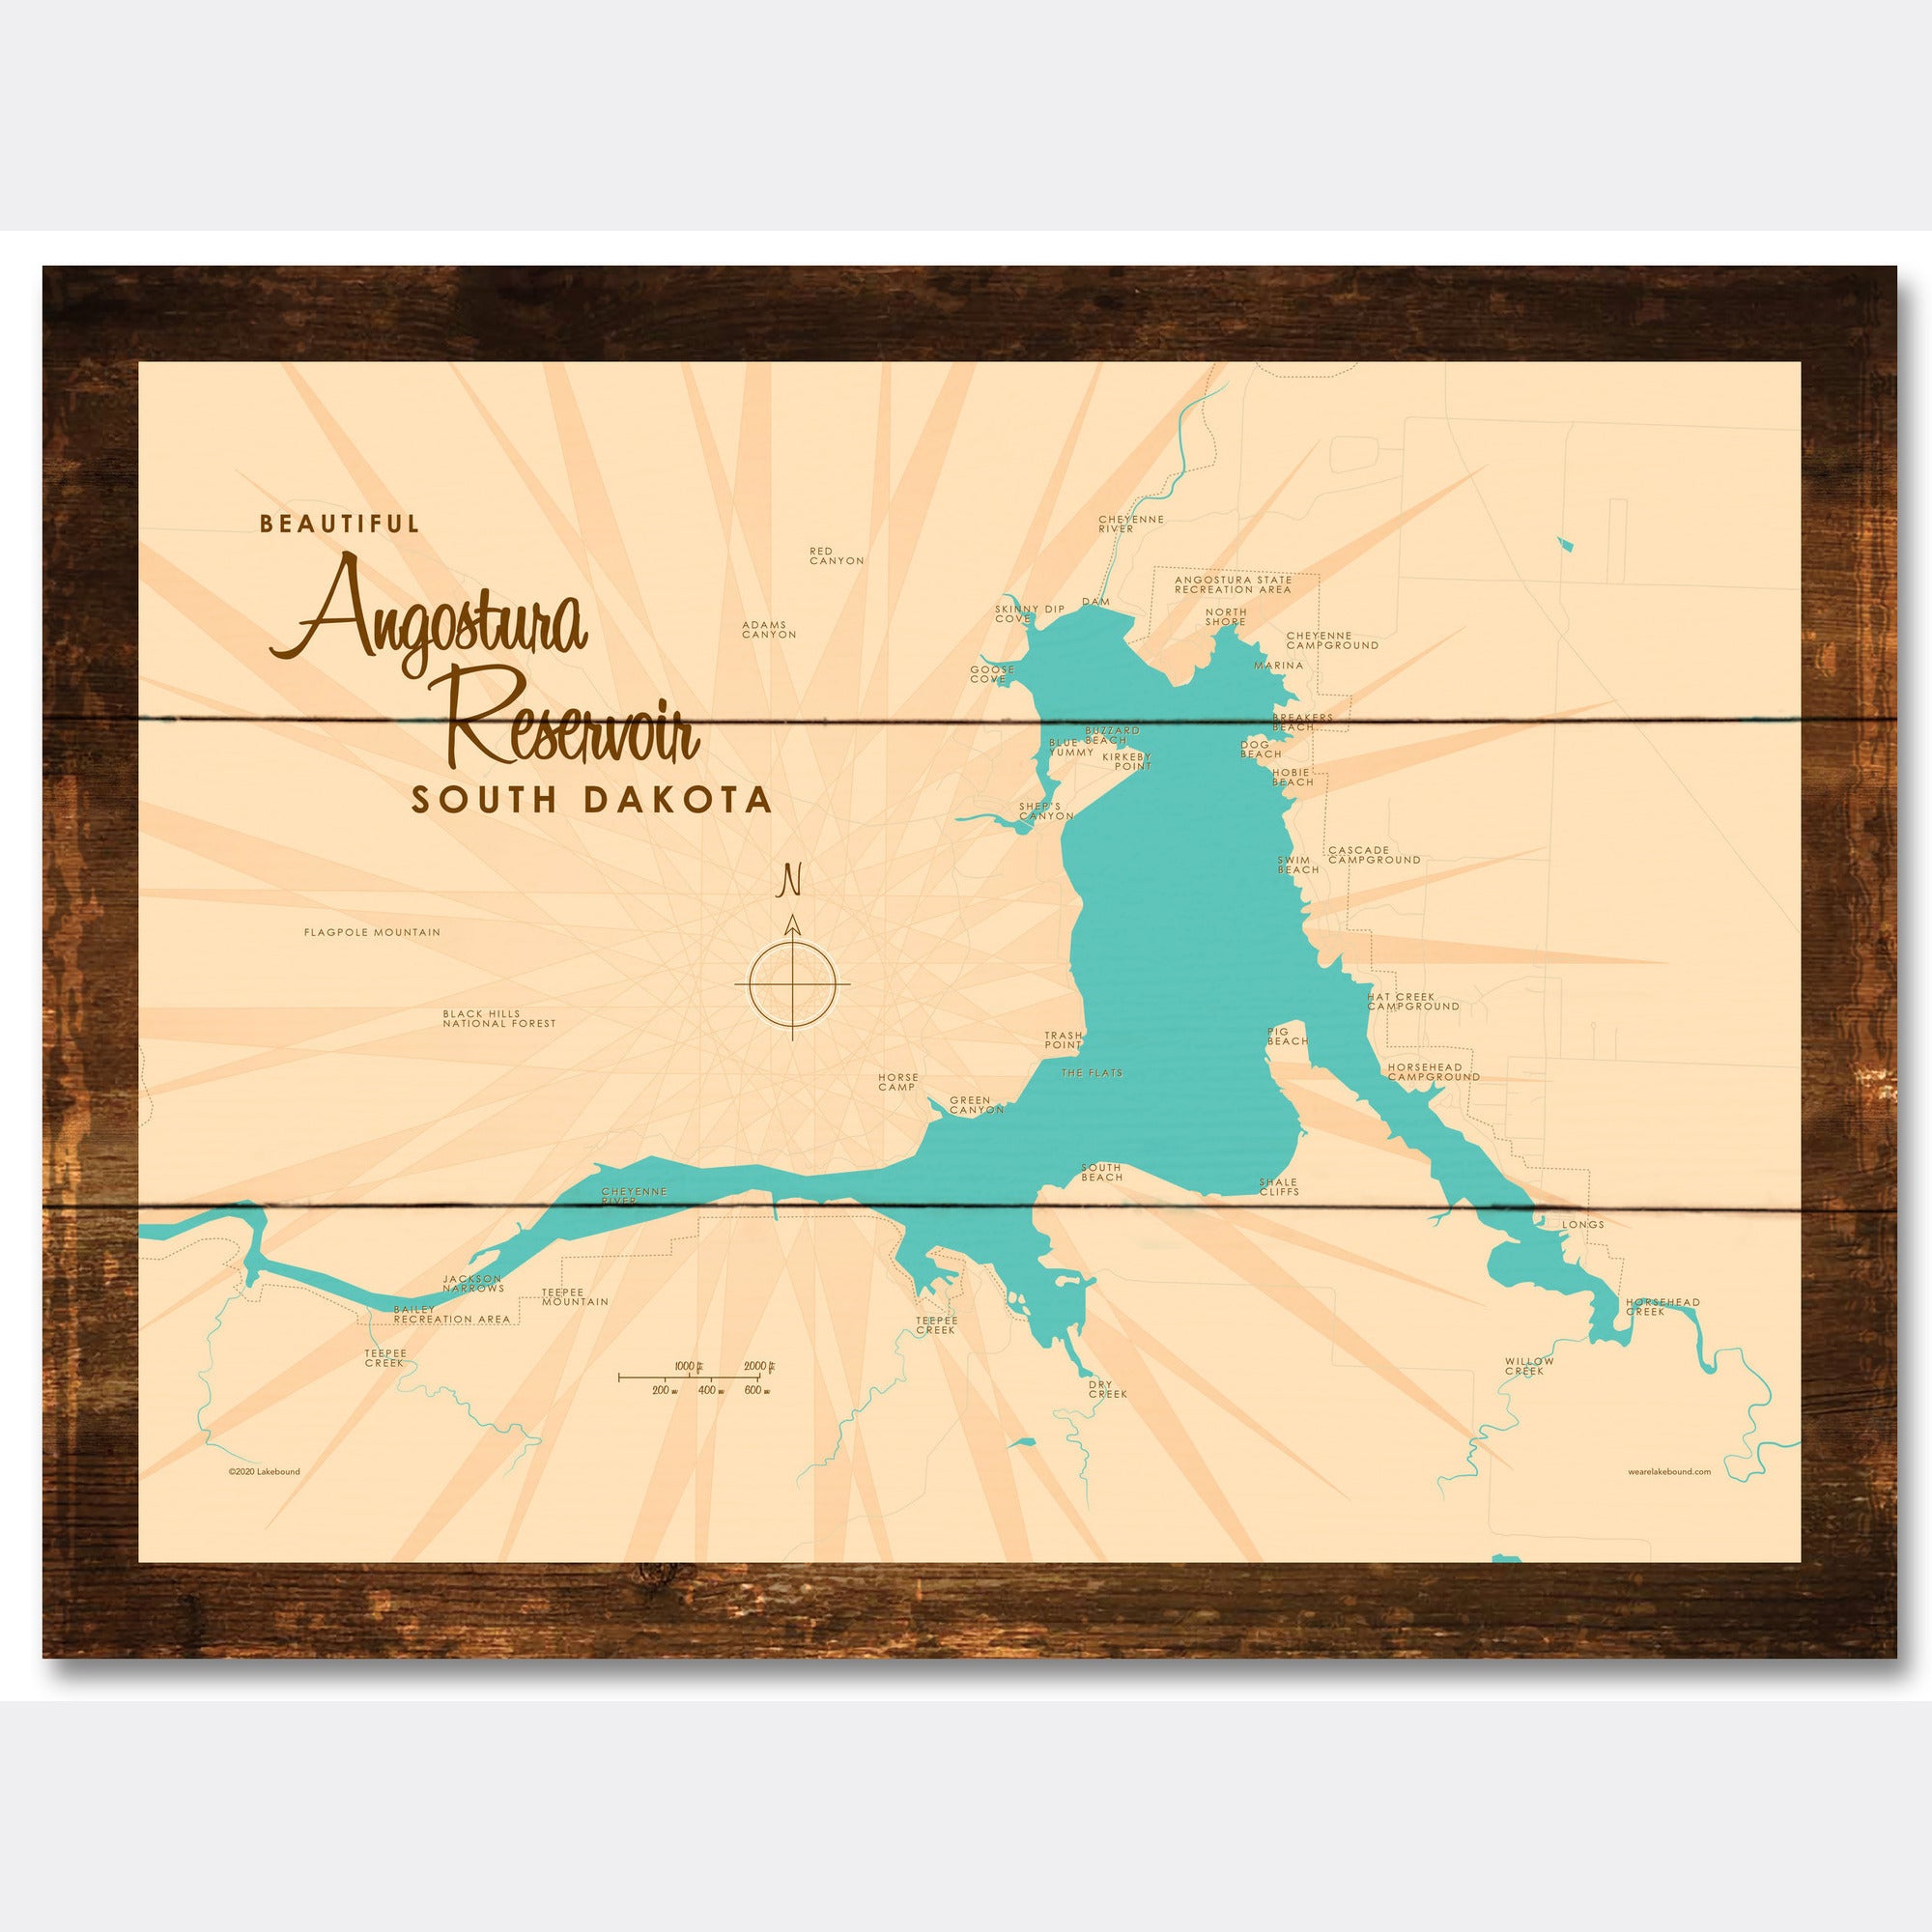 Angostura Reservoir South Dakota, Rustic Wood Sign Map Art